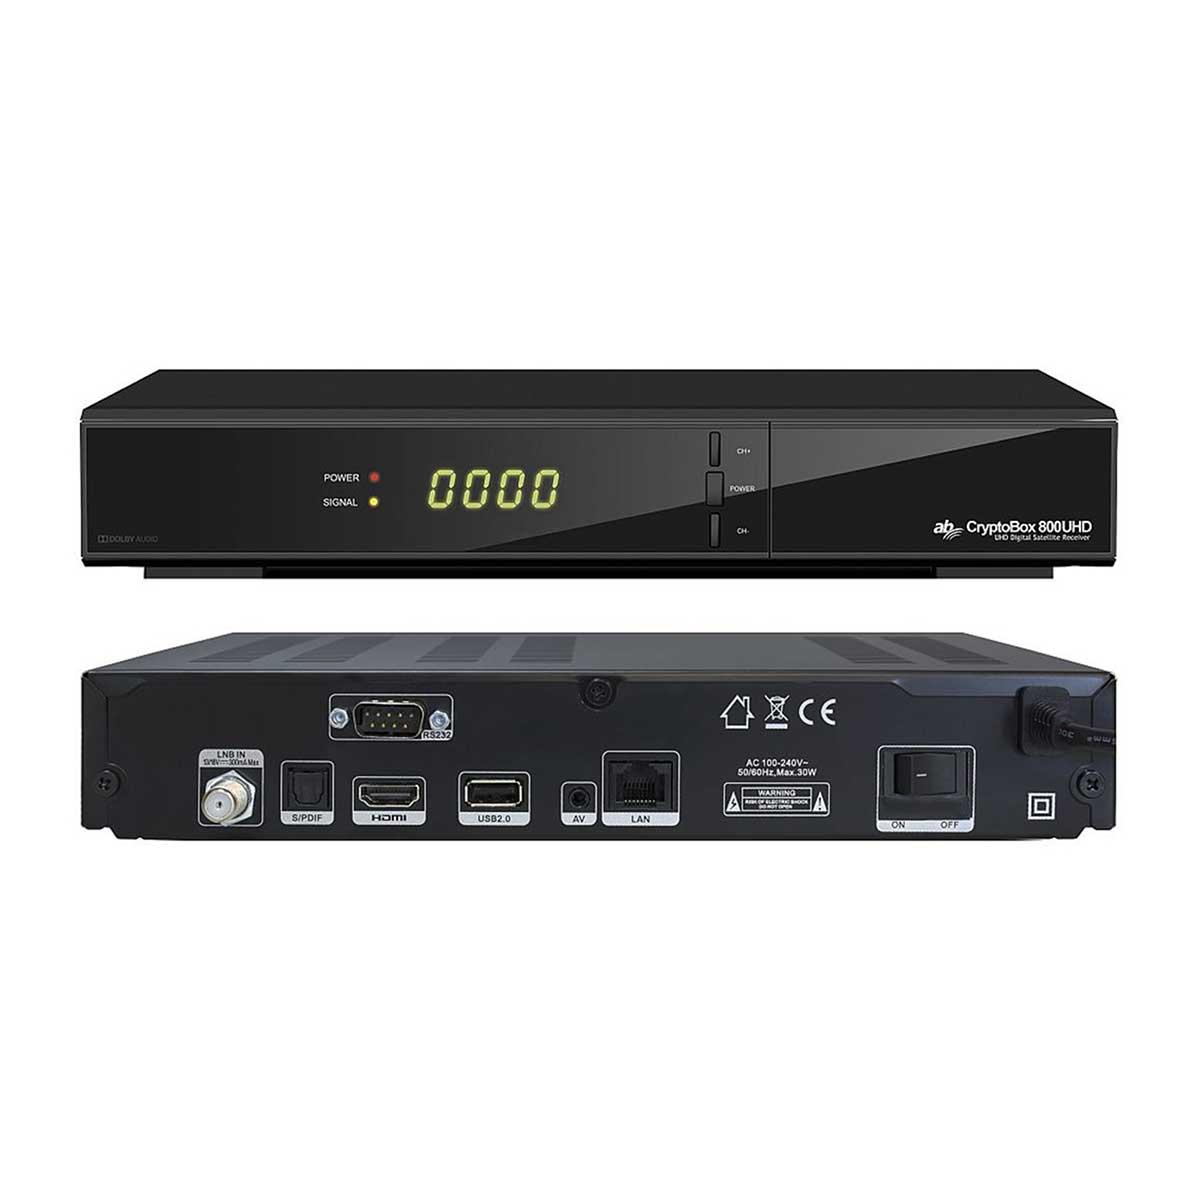 AB-COM 800UHD PVR-Funktion=optional, CryptoBox Sat-Receiver schwarz) (HDTV,